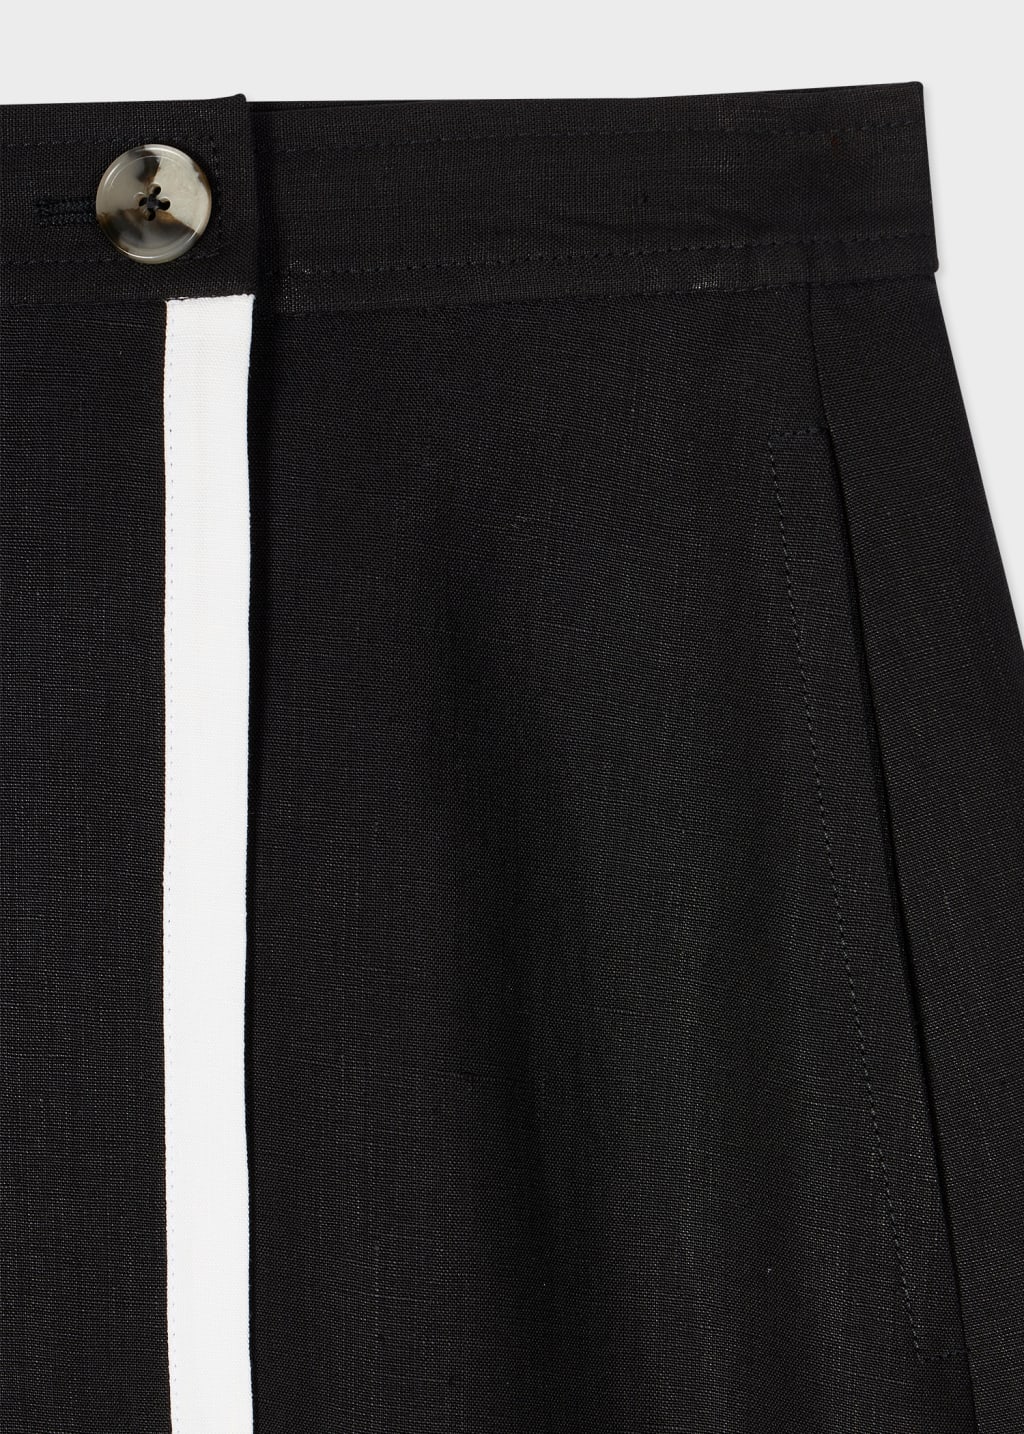 Detail View - Women's Black Line Wrap Skirt Paul Smith